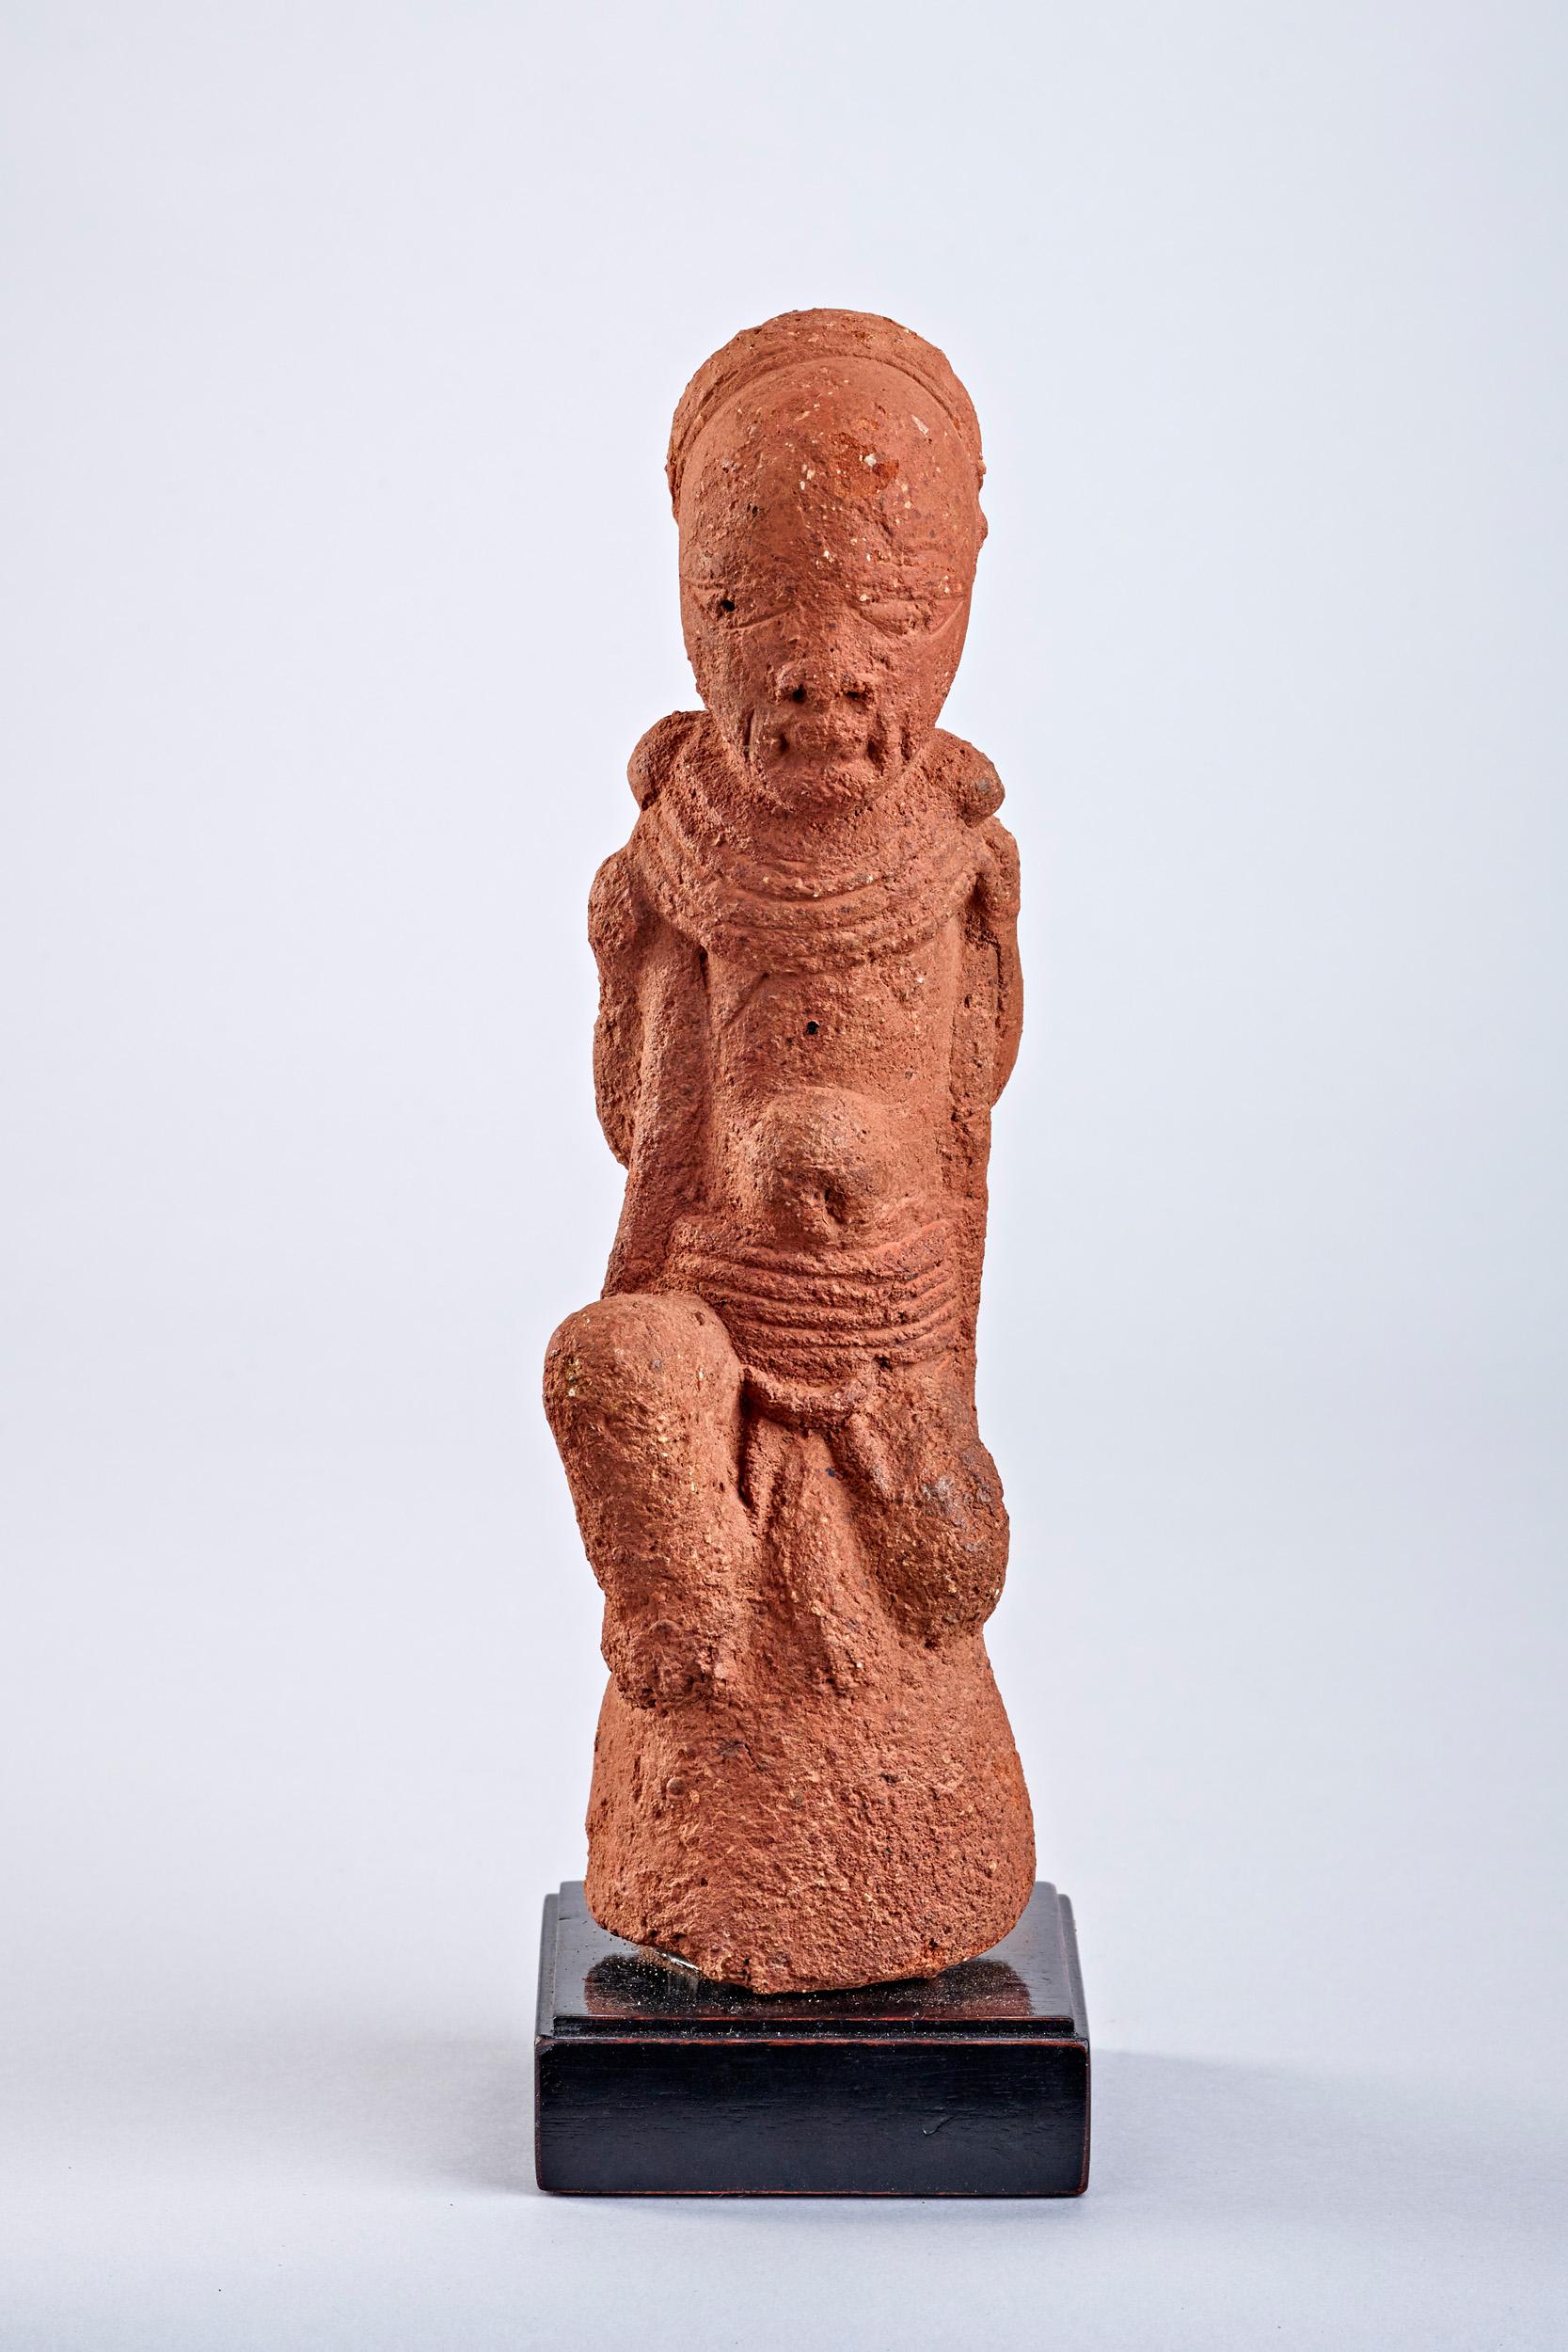 Nigerian Standing Intact 2000 Year Old Terracotta Figure, Nok Culture, Nigeria